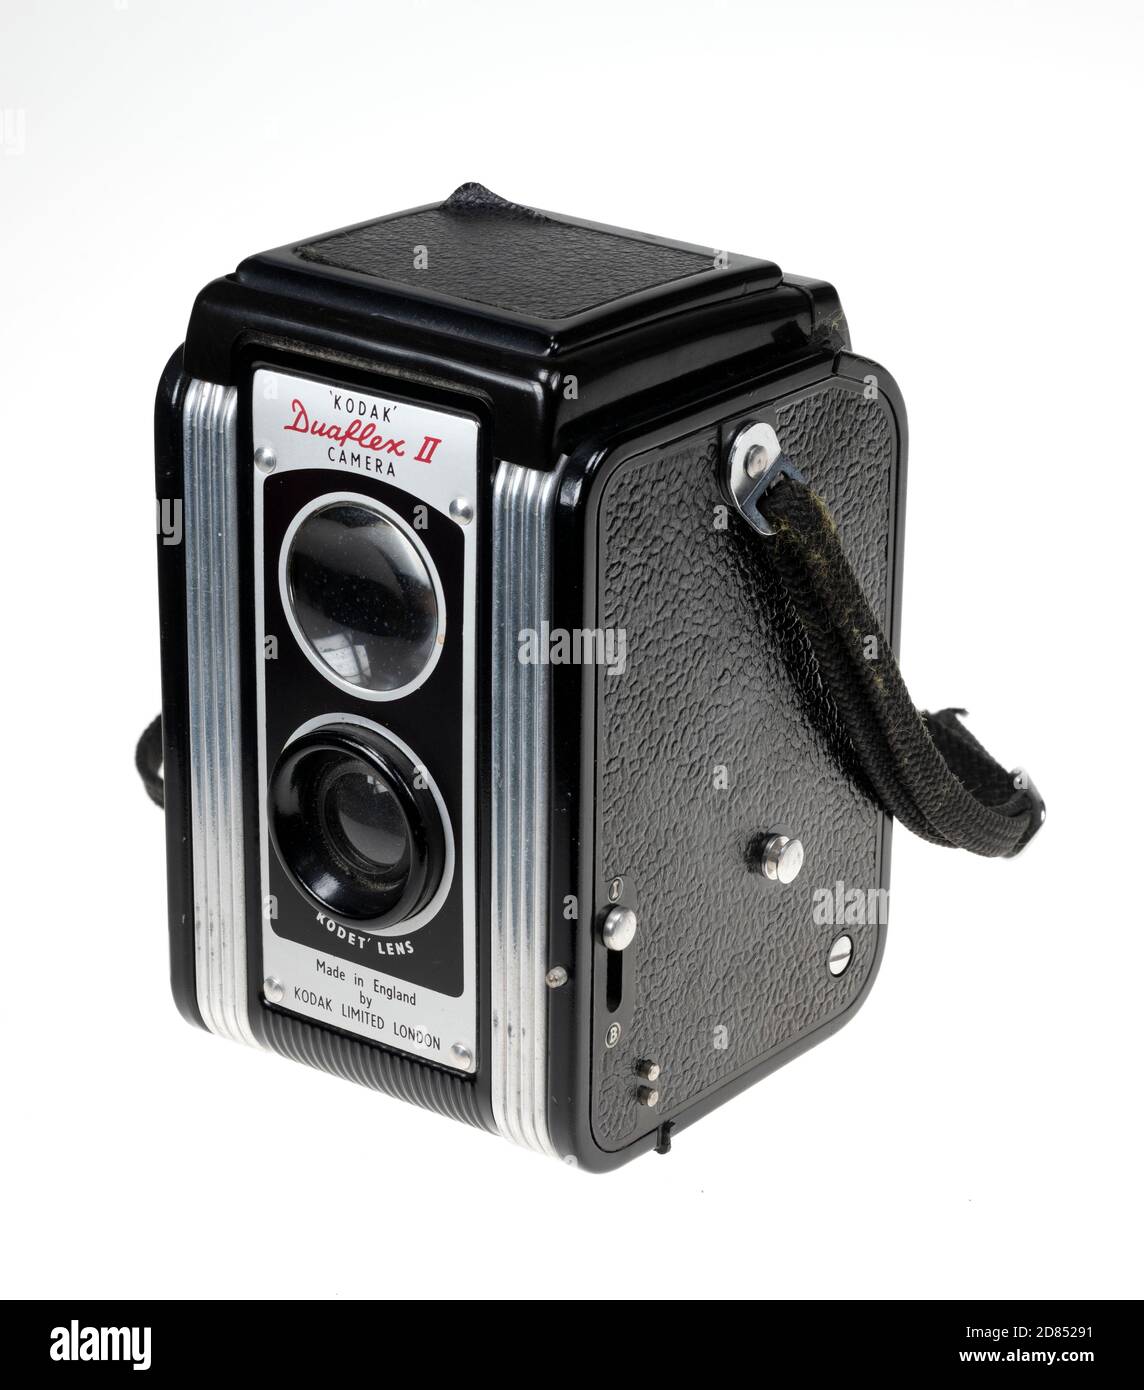 Kodak Duaflex II camera Stock Photo - Alamy